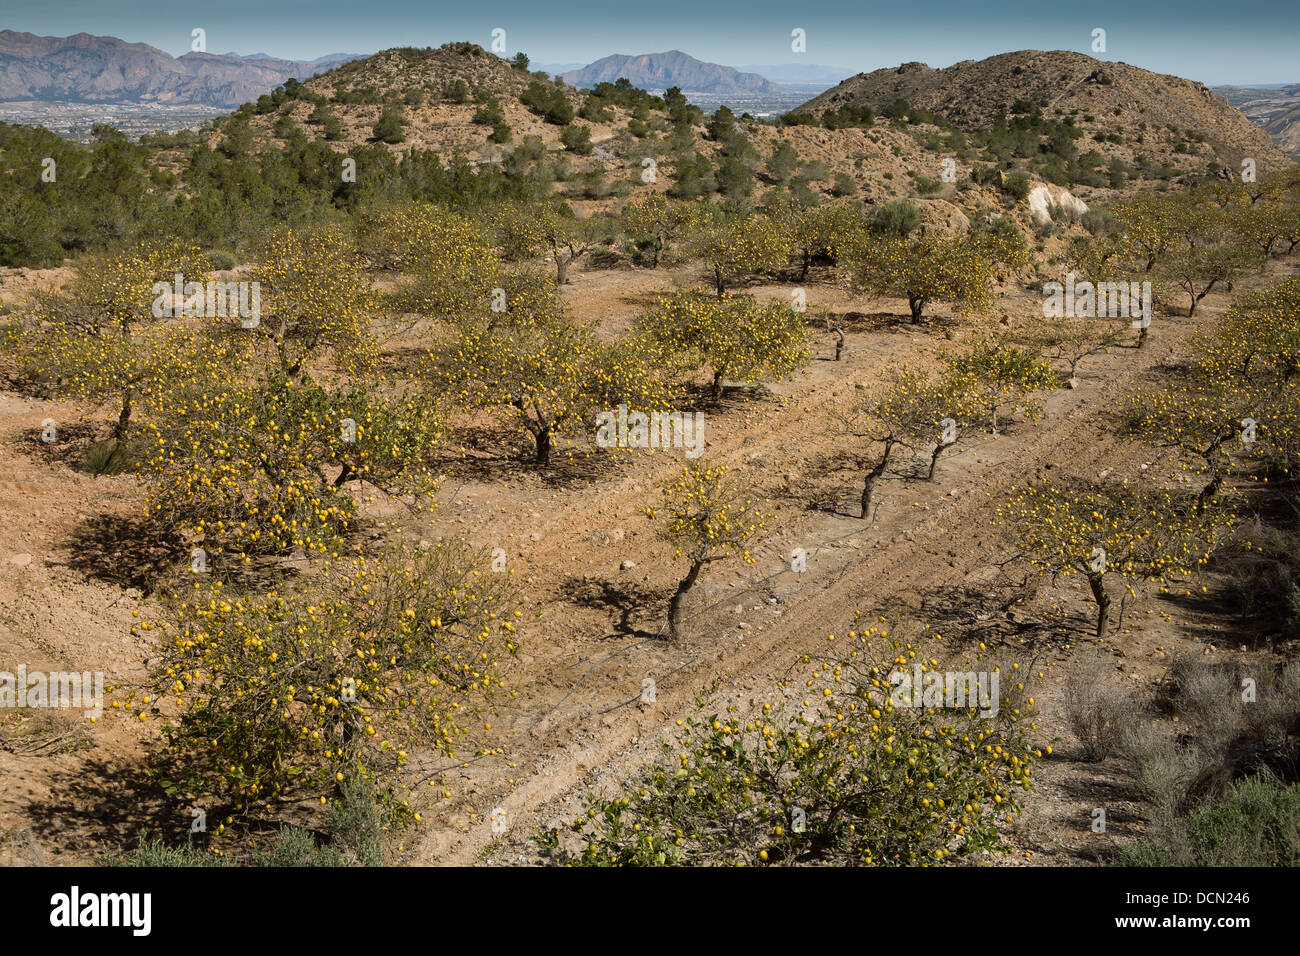 Lemons growing on trees in the region of Murcia, Spain. Stock Photo